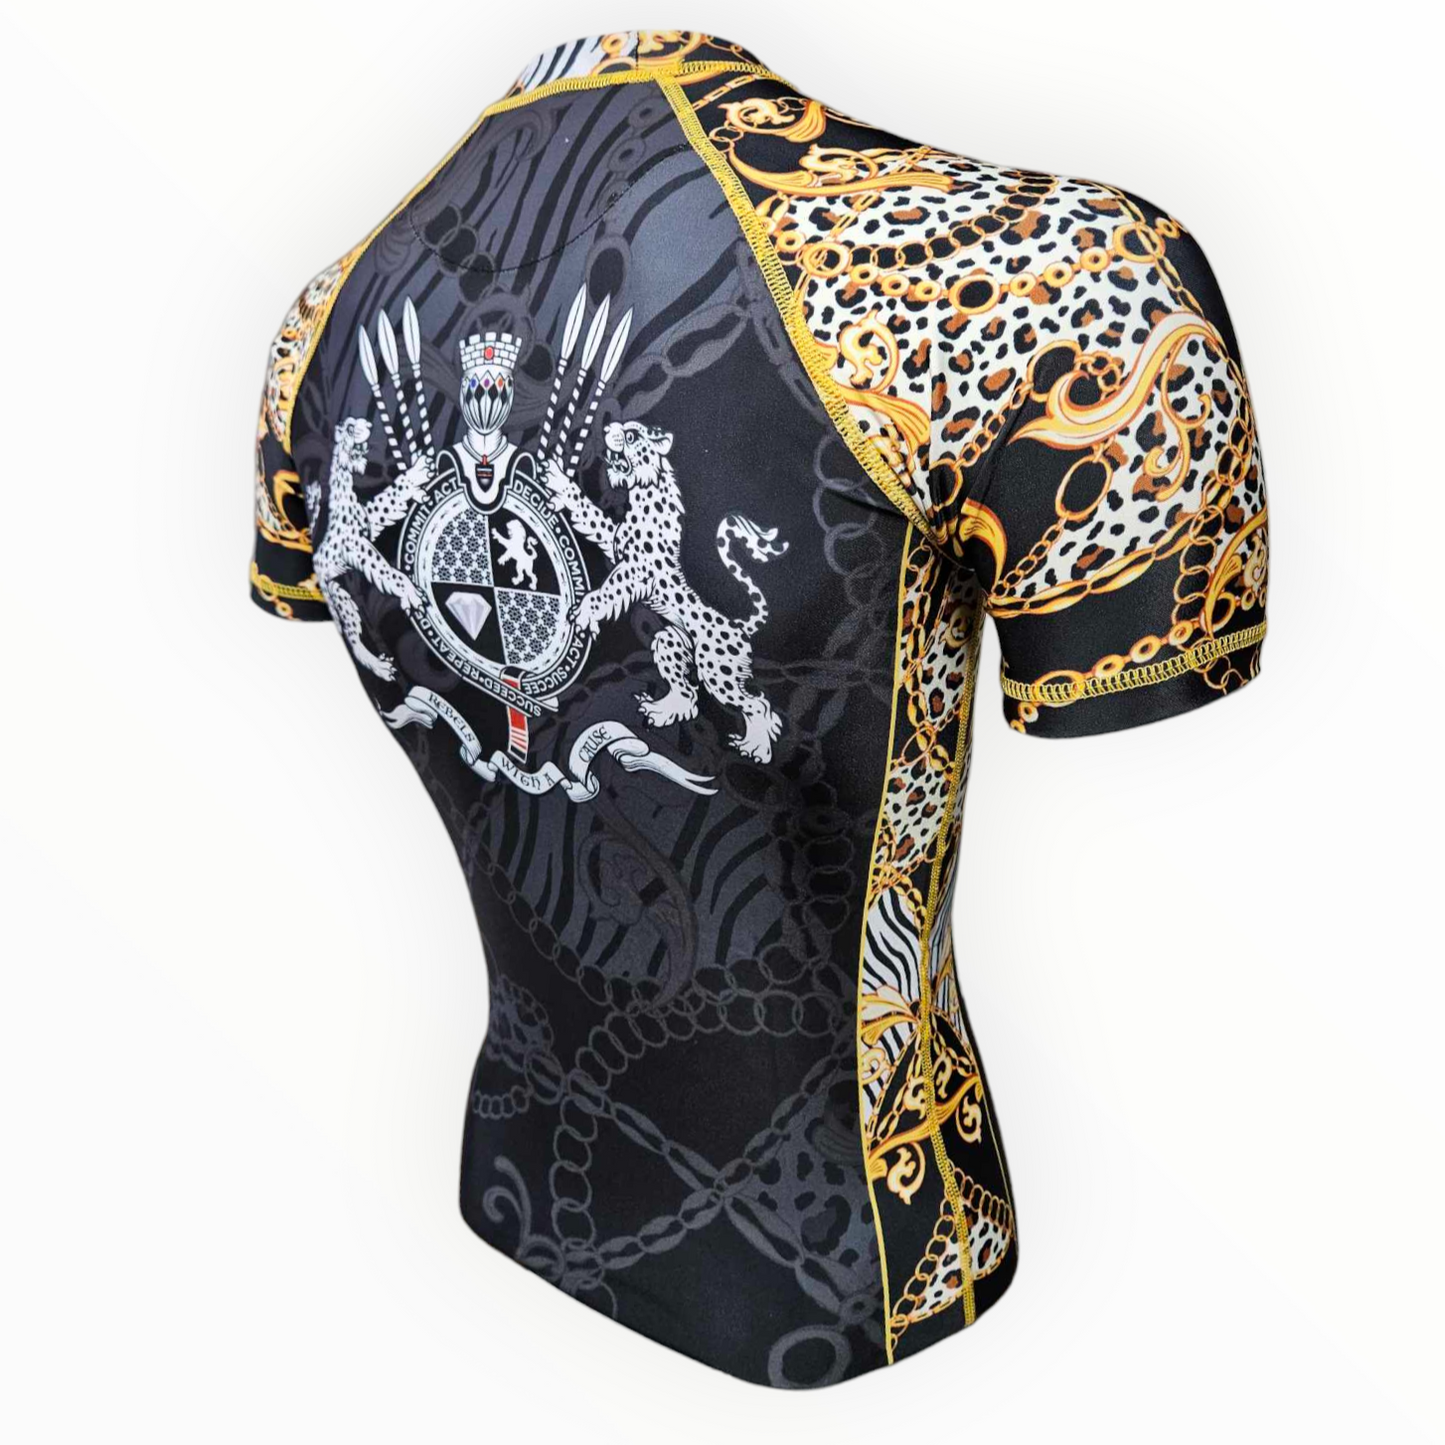 BJJ Couture Black and Gold Leopard Chains Rashguard